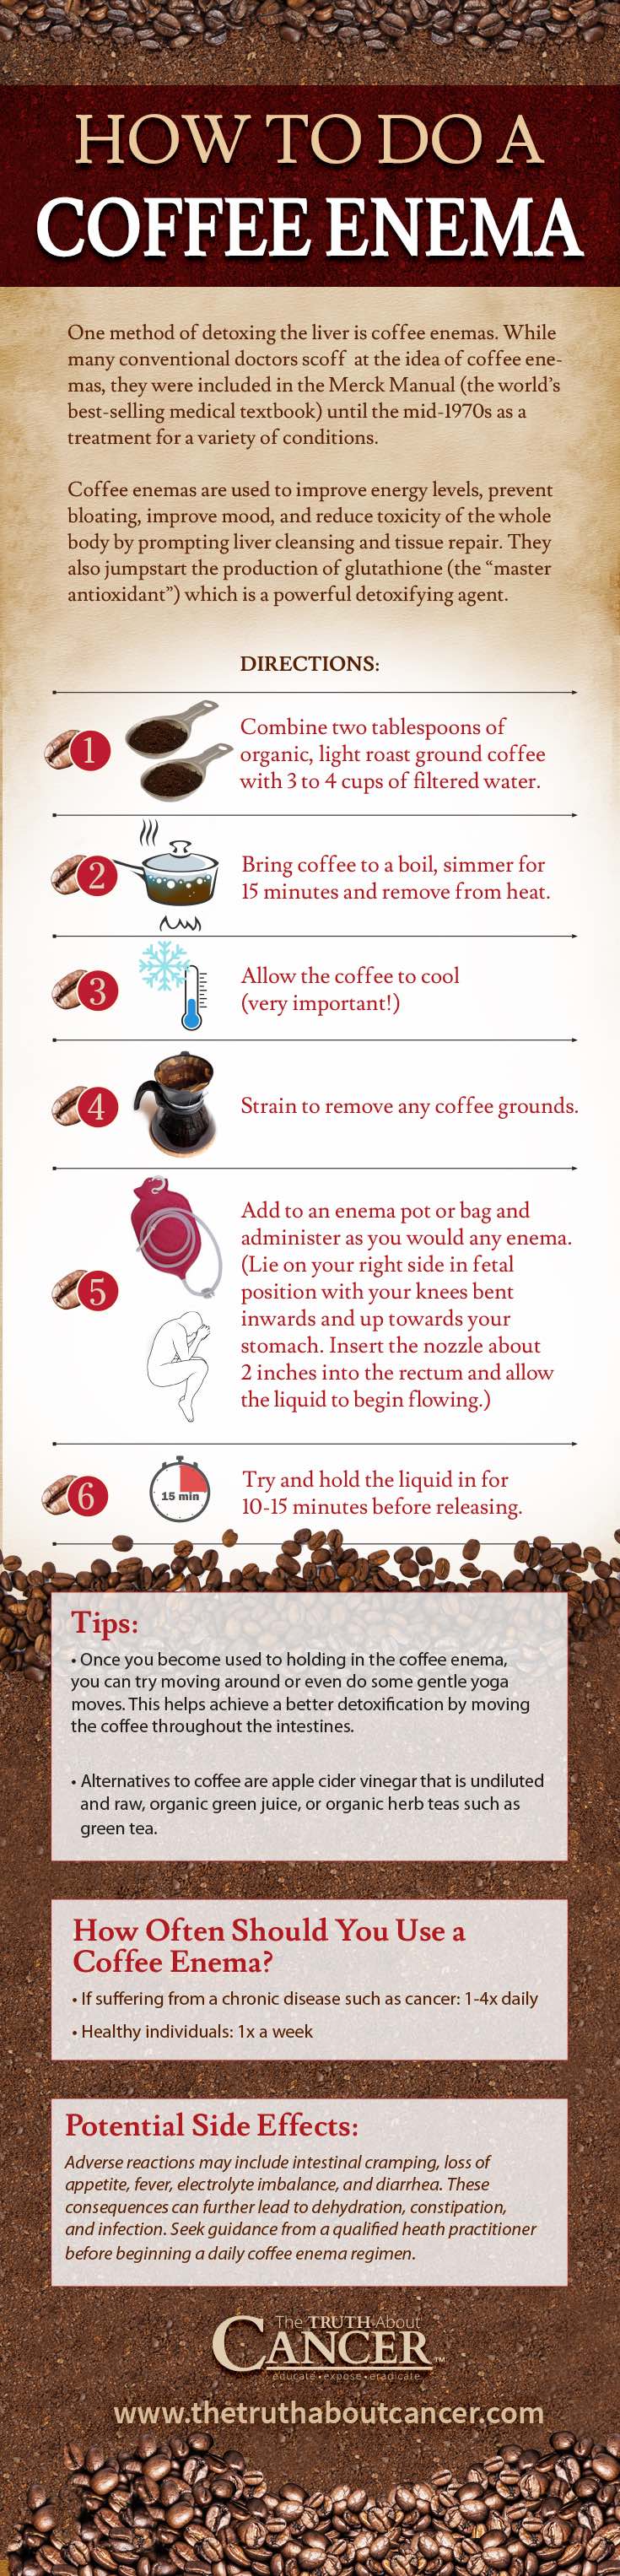 image-how-to-do-coffee-enemas